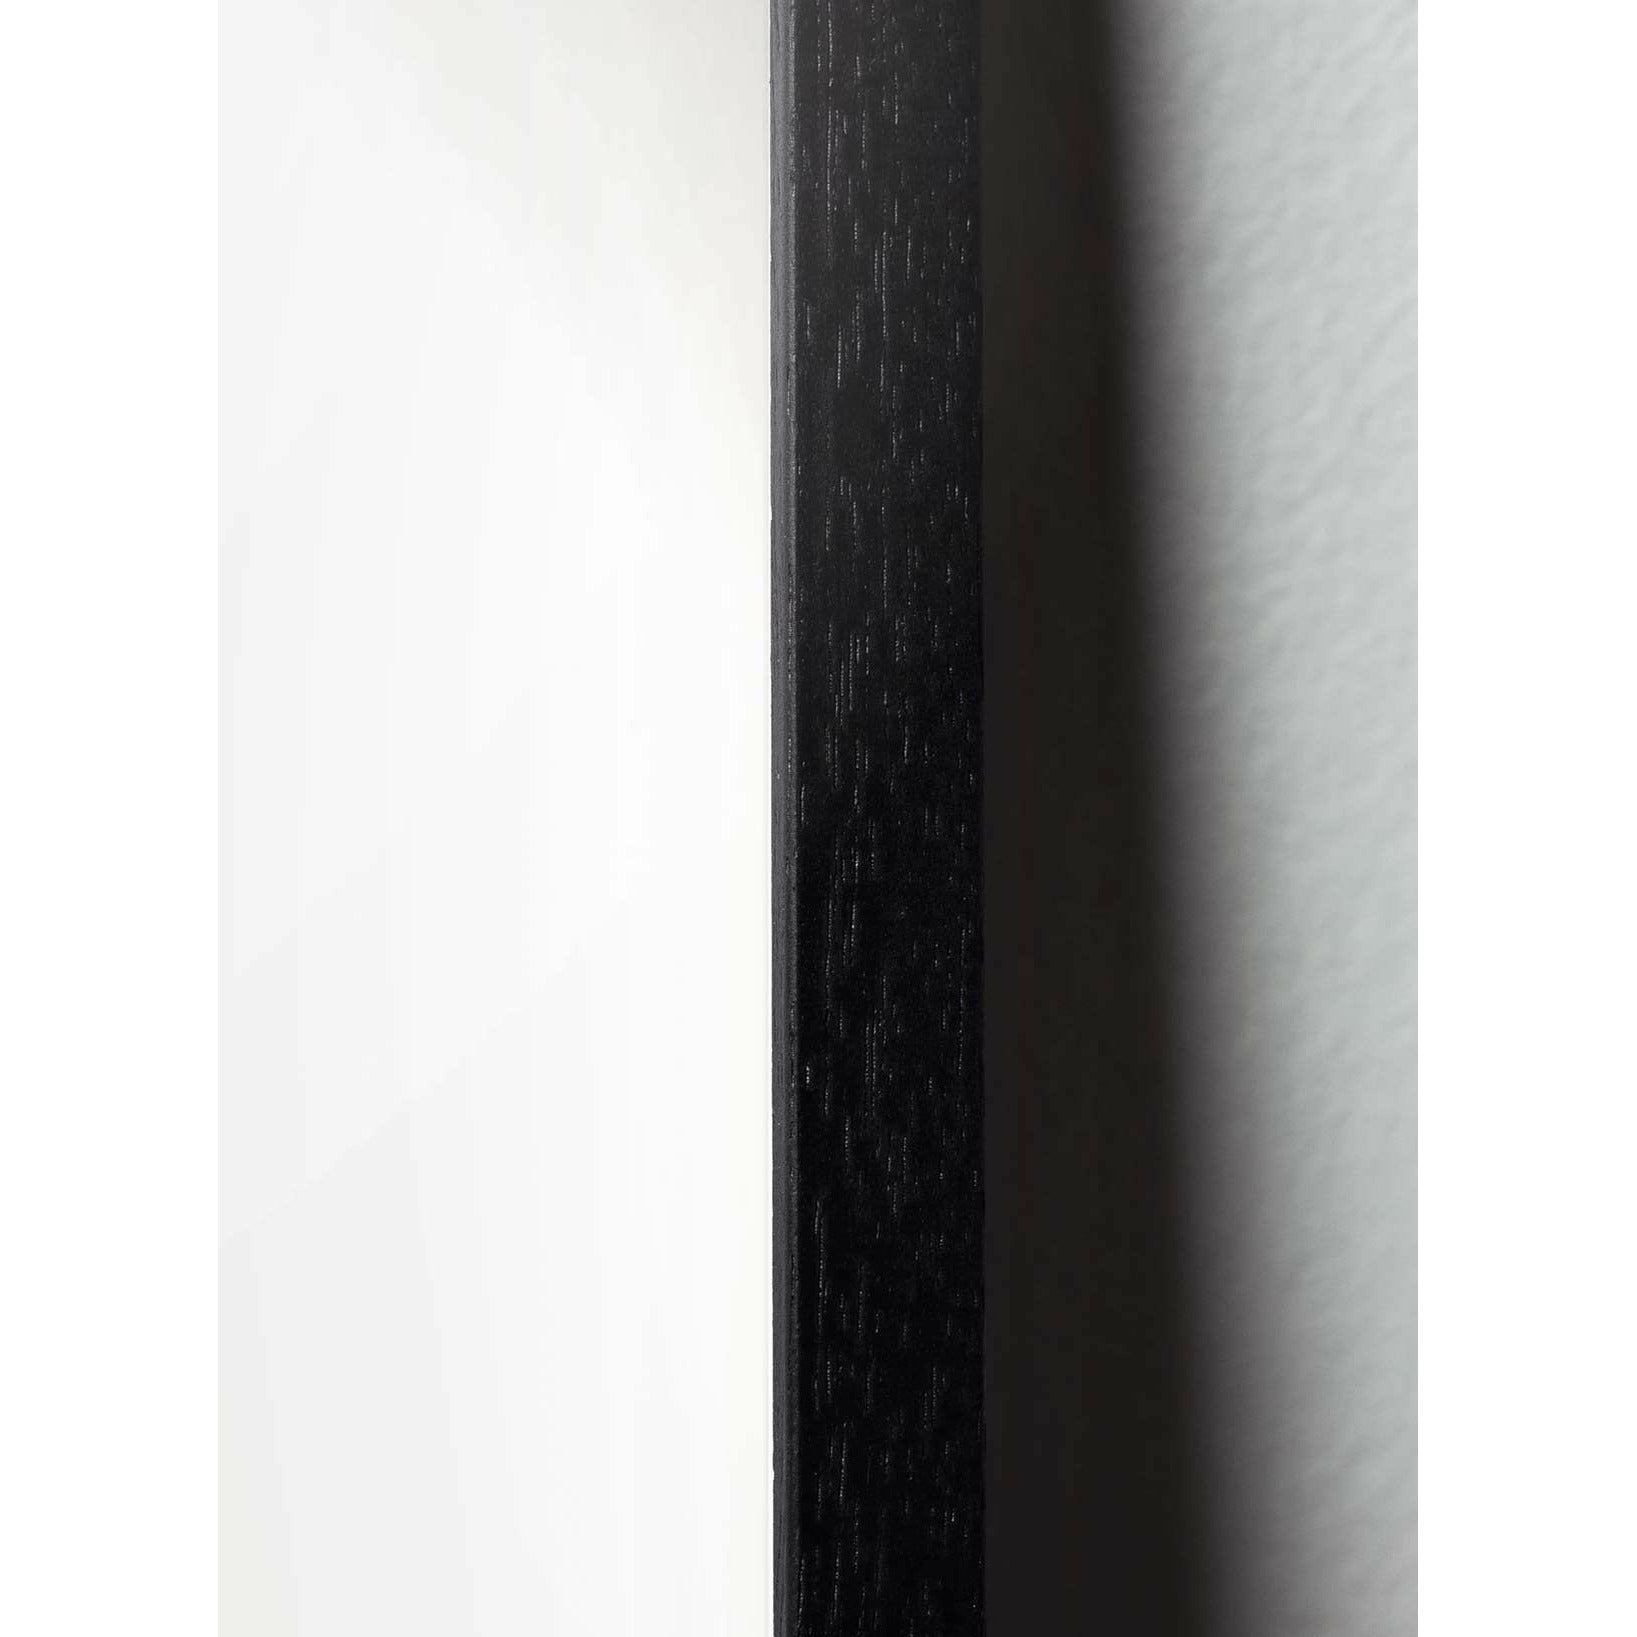 Brainchild Pelikan Classic Poster, ram i svart lackerat trä 30x40 cm, mörkblå bakgrund